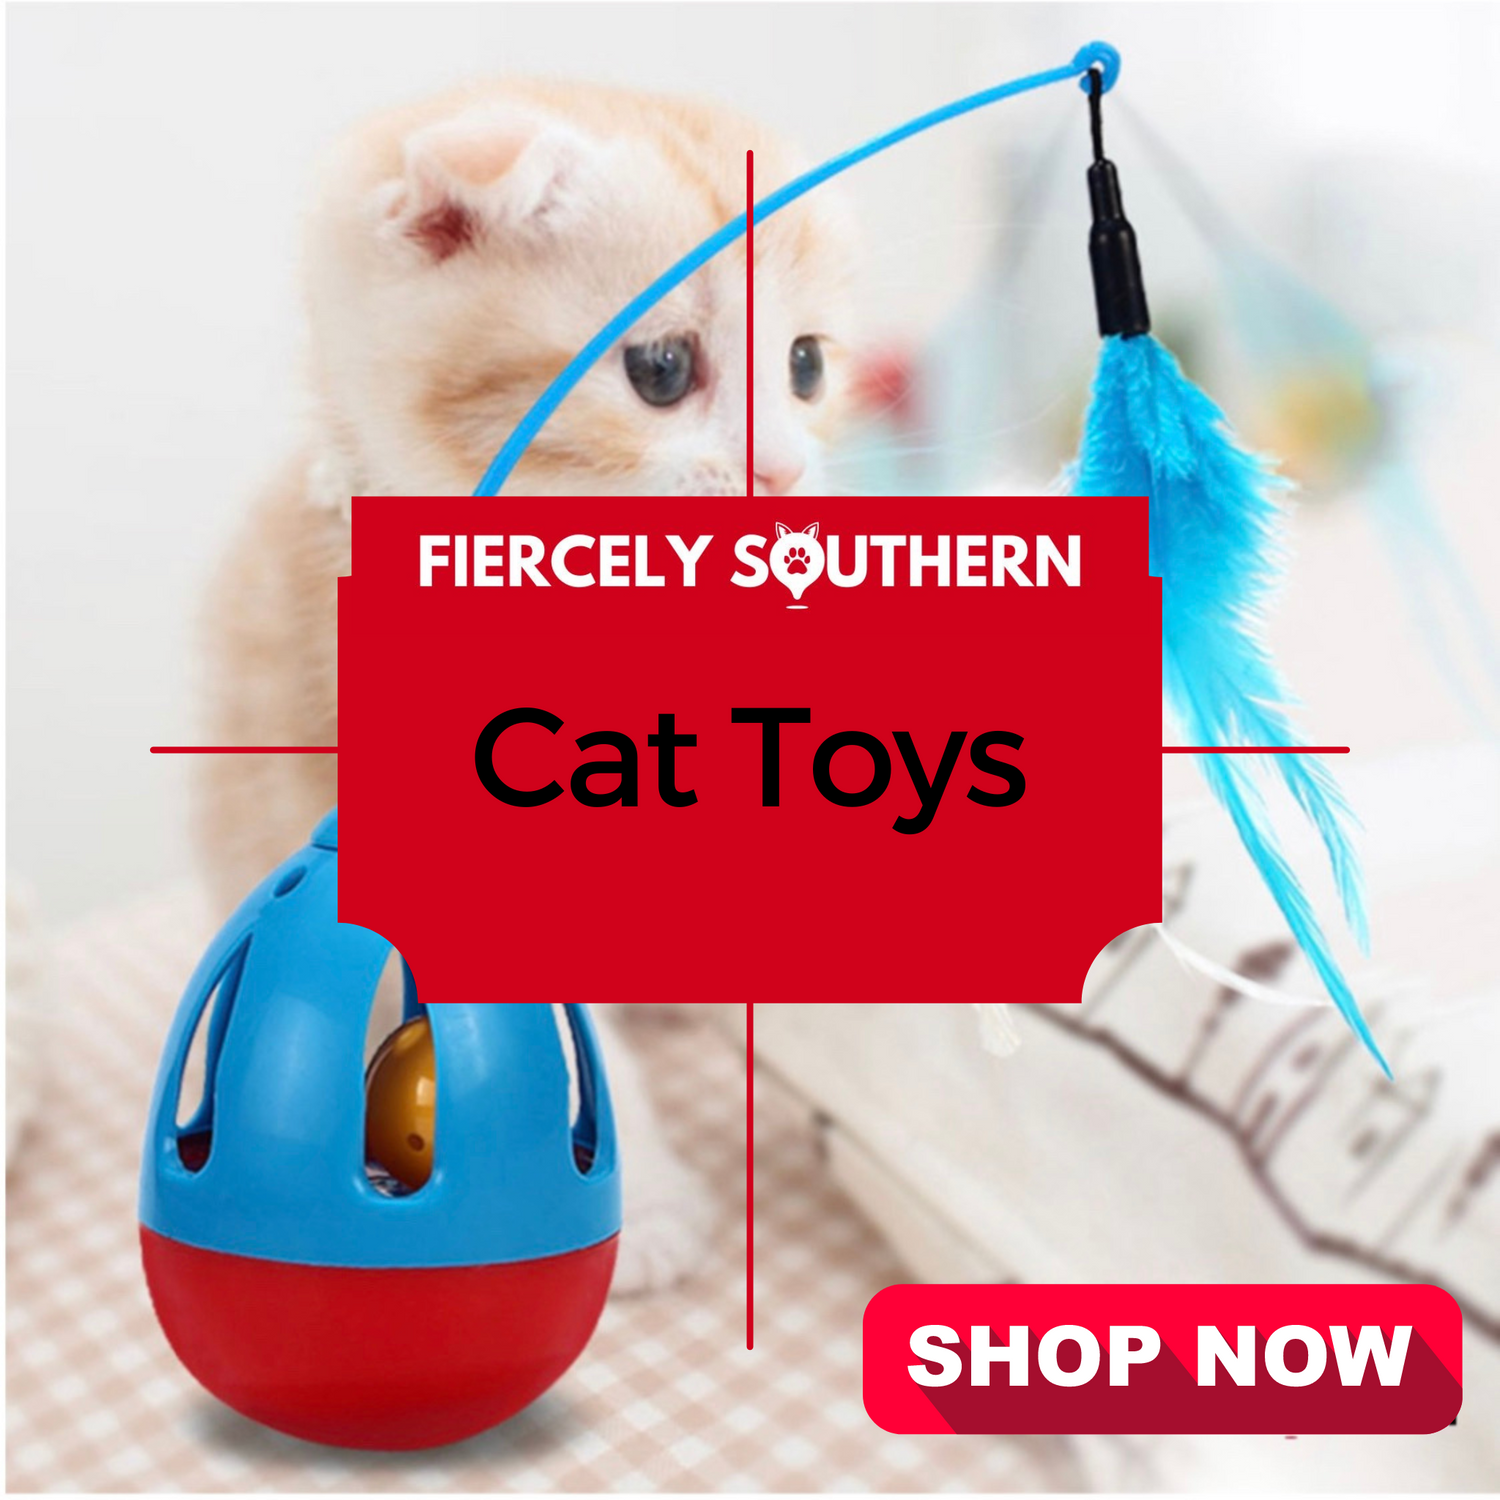 Cat Toys - Fiercely Southern